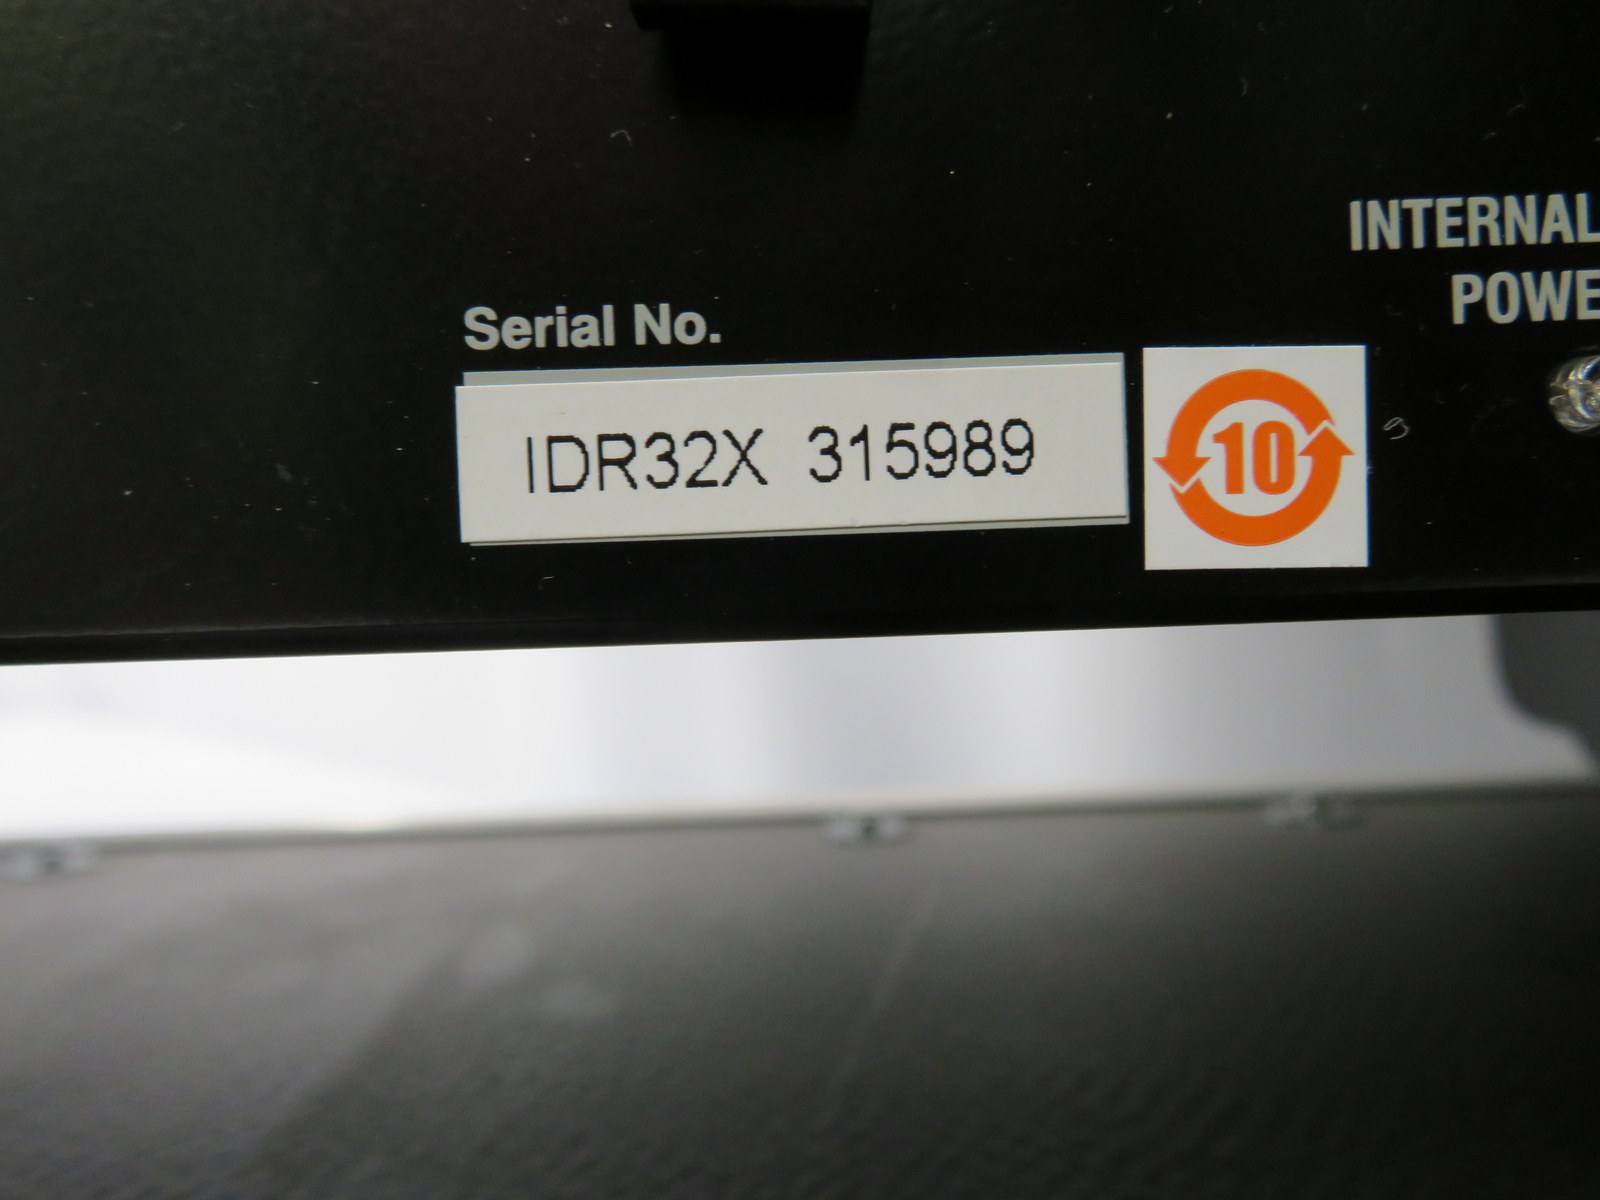 Allen & Heath iDR-32 audio mix rack. Serial number: IDR32X 315989. - Image 9 of 10